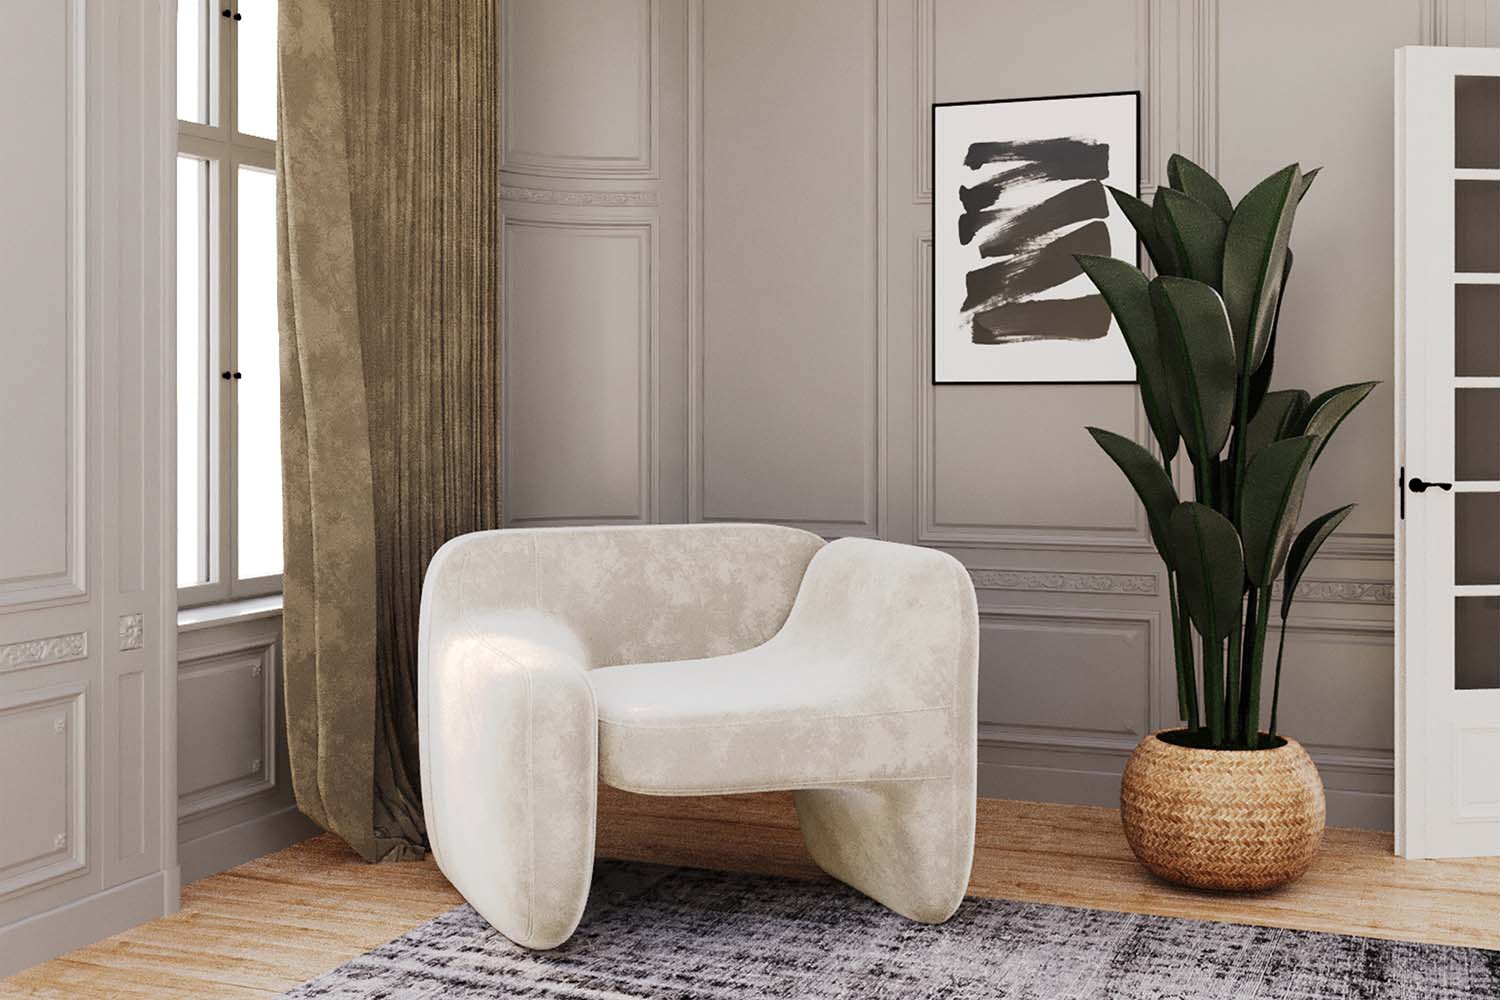 Stoniture沙发是由阿巴斯苏菲内贾德在家具设计类别,2022 - 2023